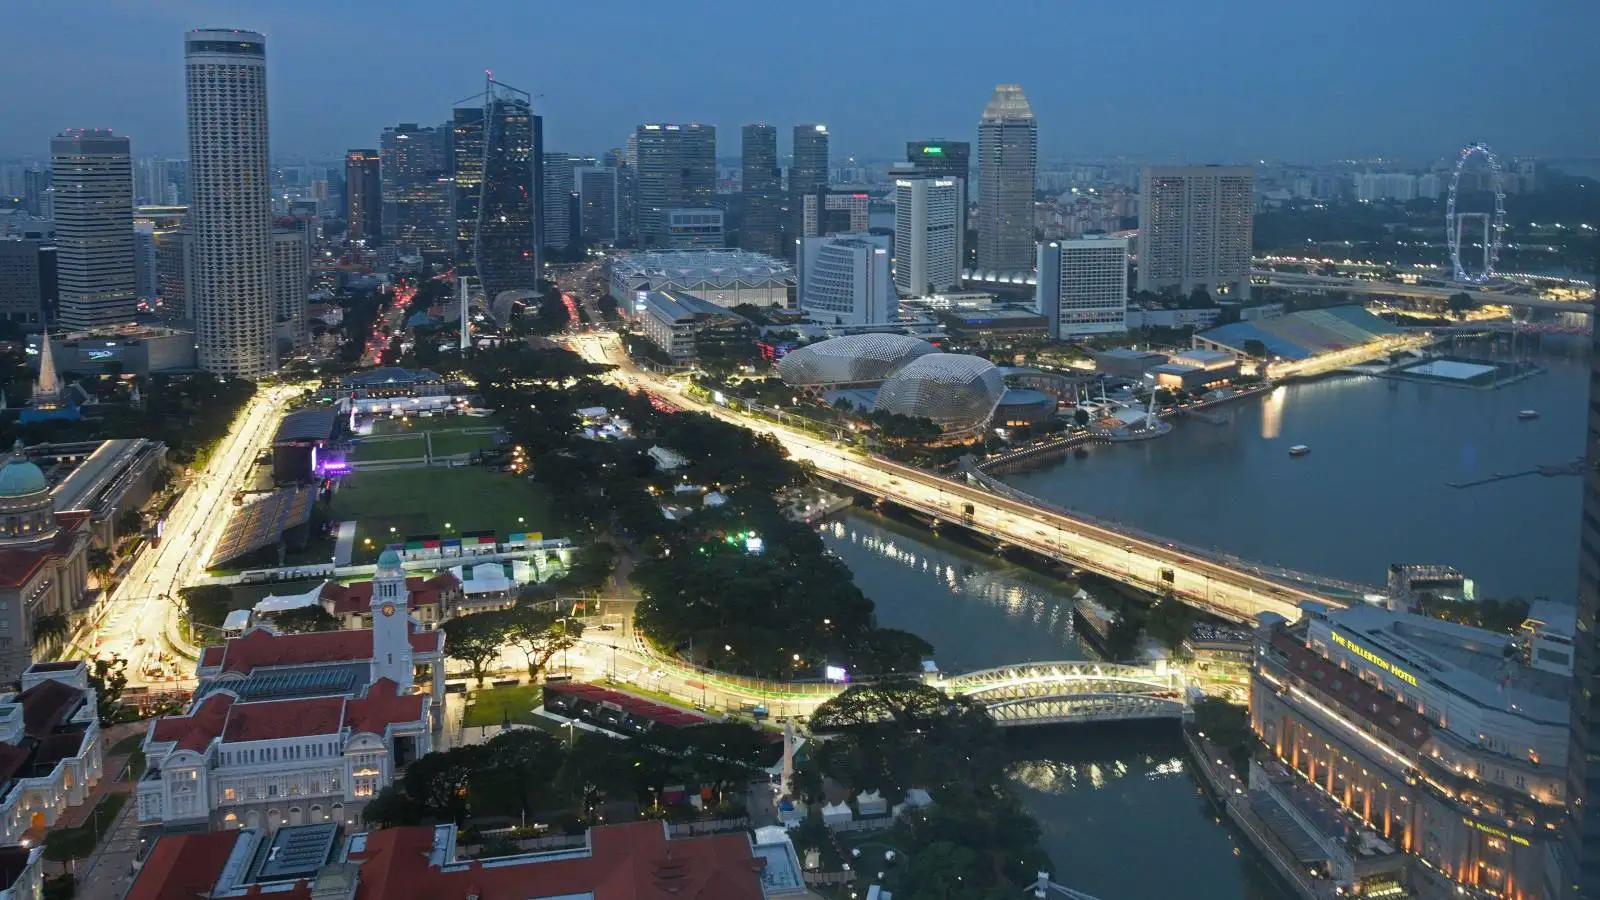 The Marina Bay Street Circuit ahead of the Singapore Grand Prix. Singapore Grand Prix, September 2022.